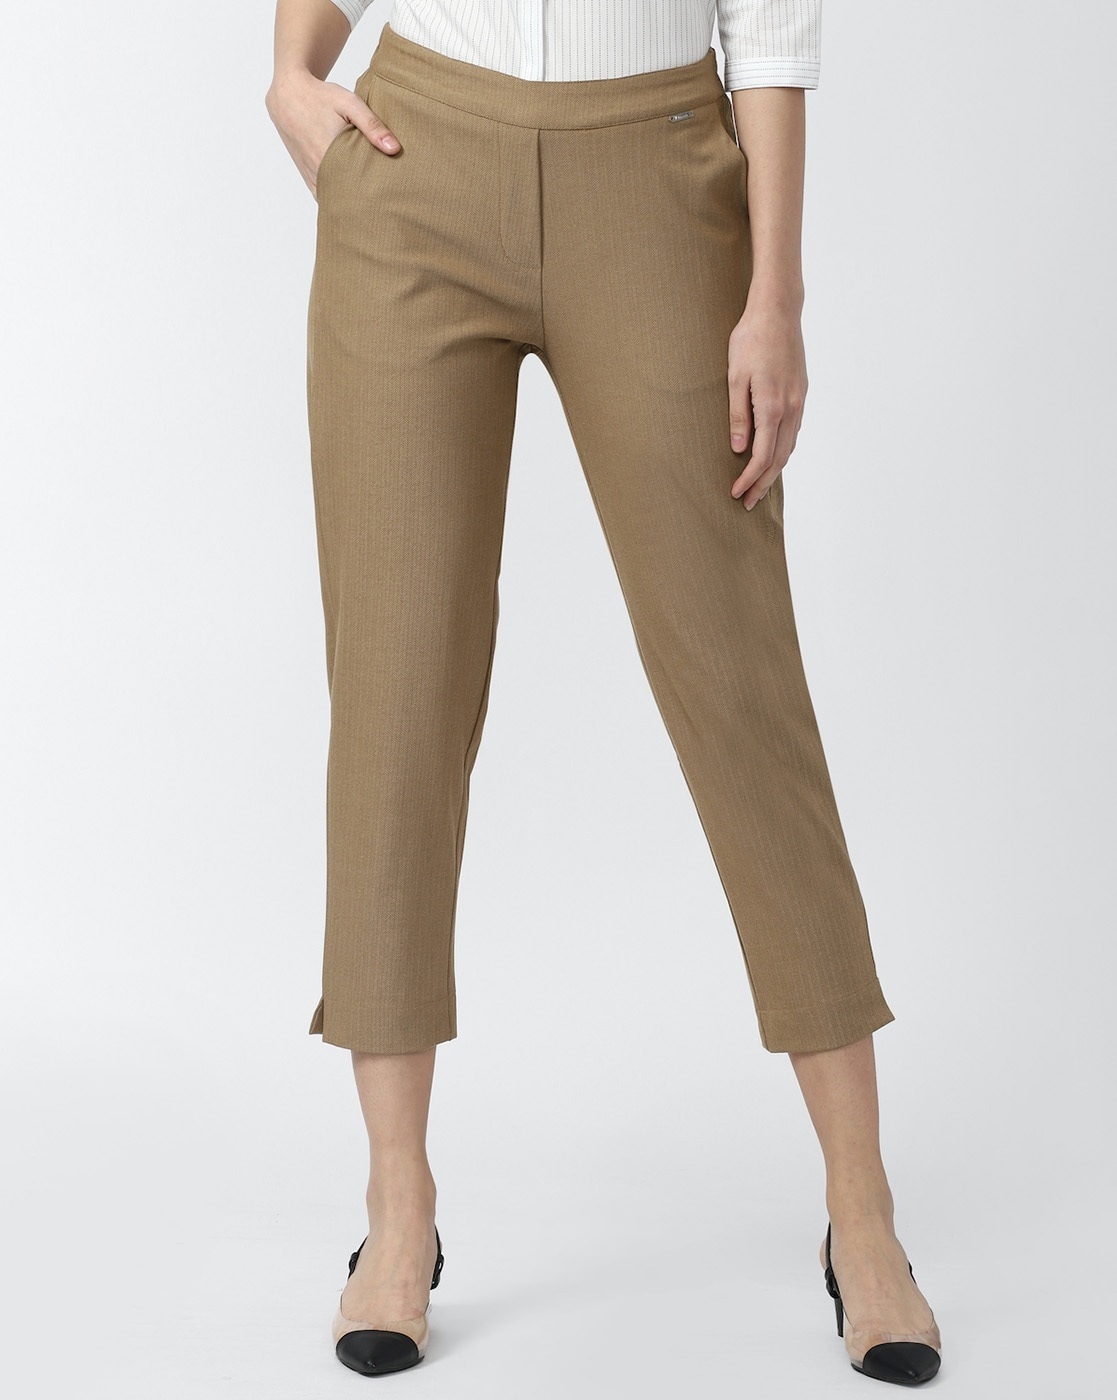 Buy Khaki Trousers  Pants for Women by VAN HEUSEN Online  Ajiocom